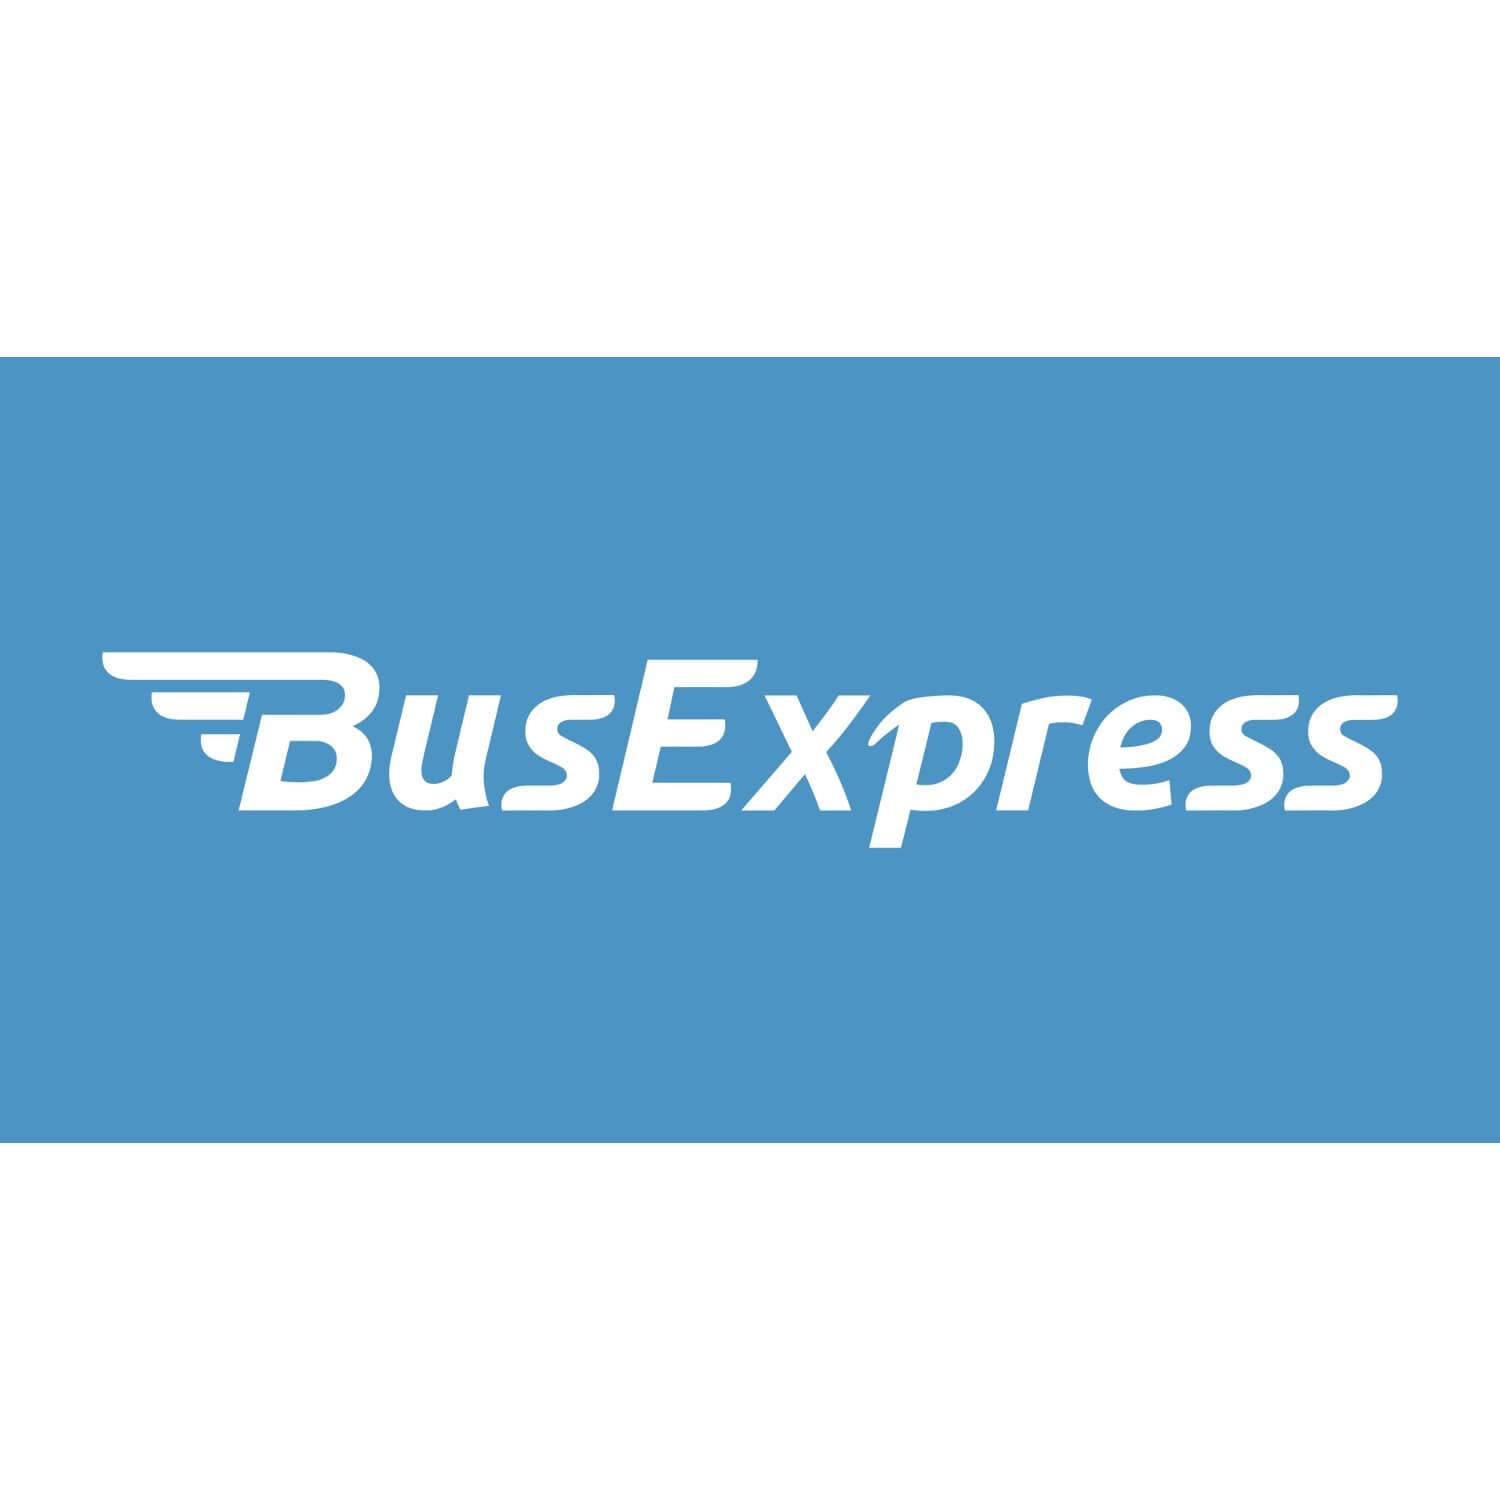 busexpress